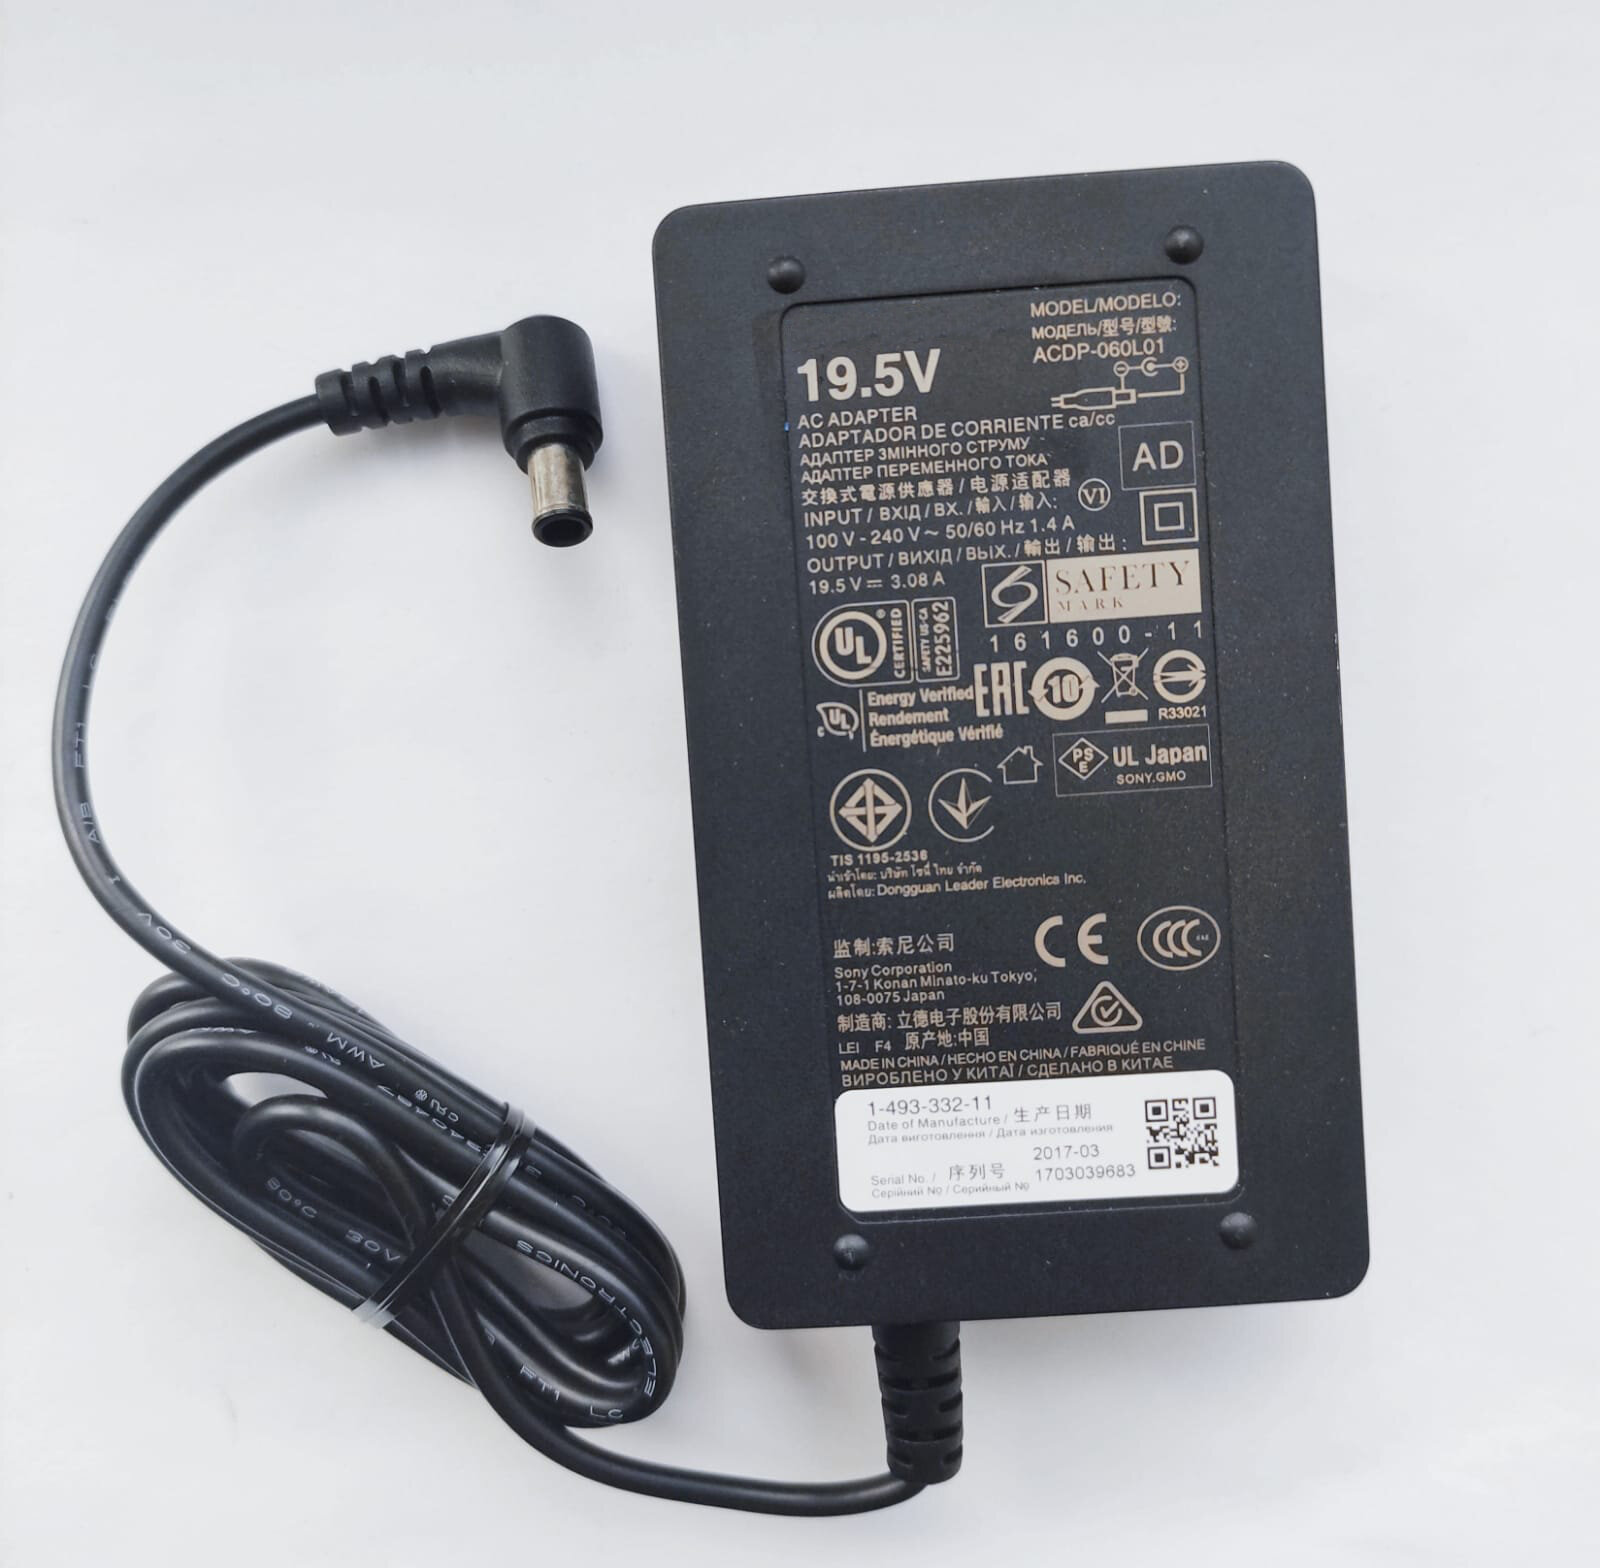 Адаптер переменного тока (блок питания) для телевизора SONY ACDP-060S03 ACDP-060L01 19.5V - 3.08A 60W